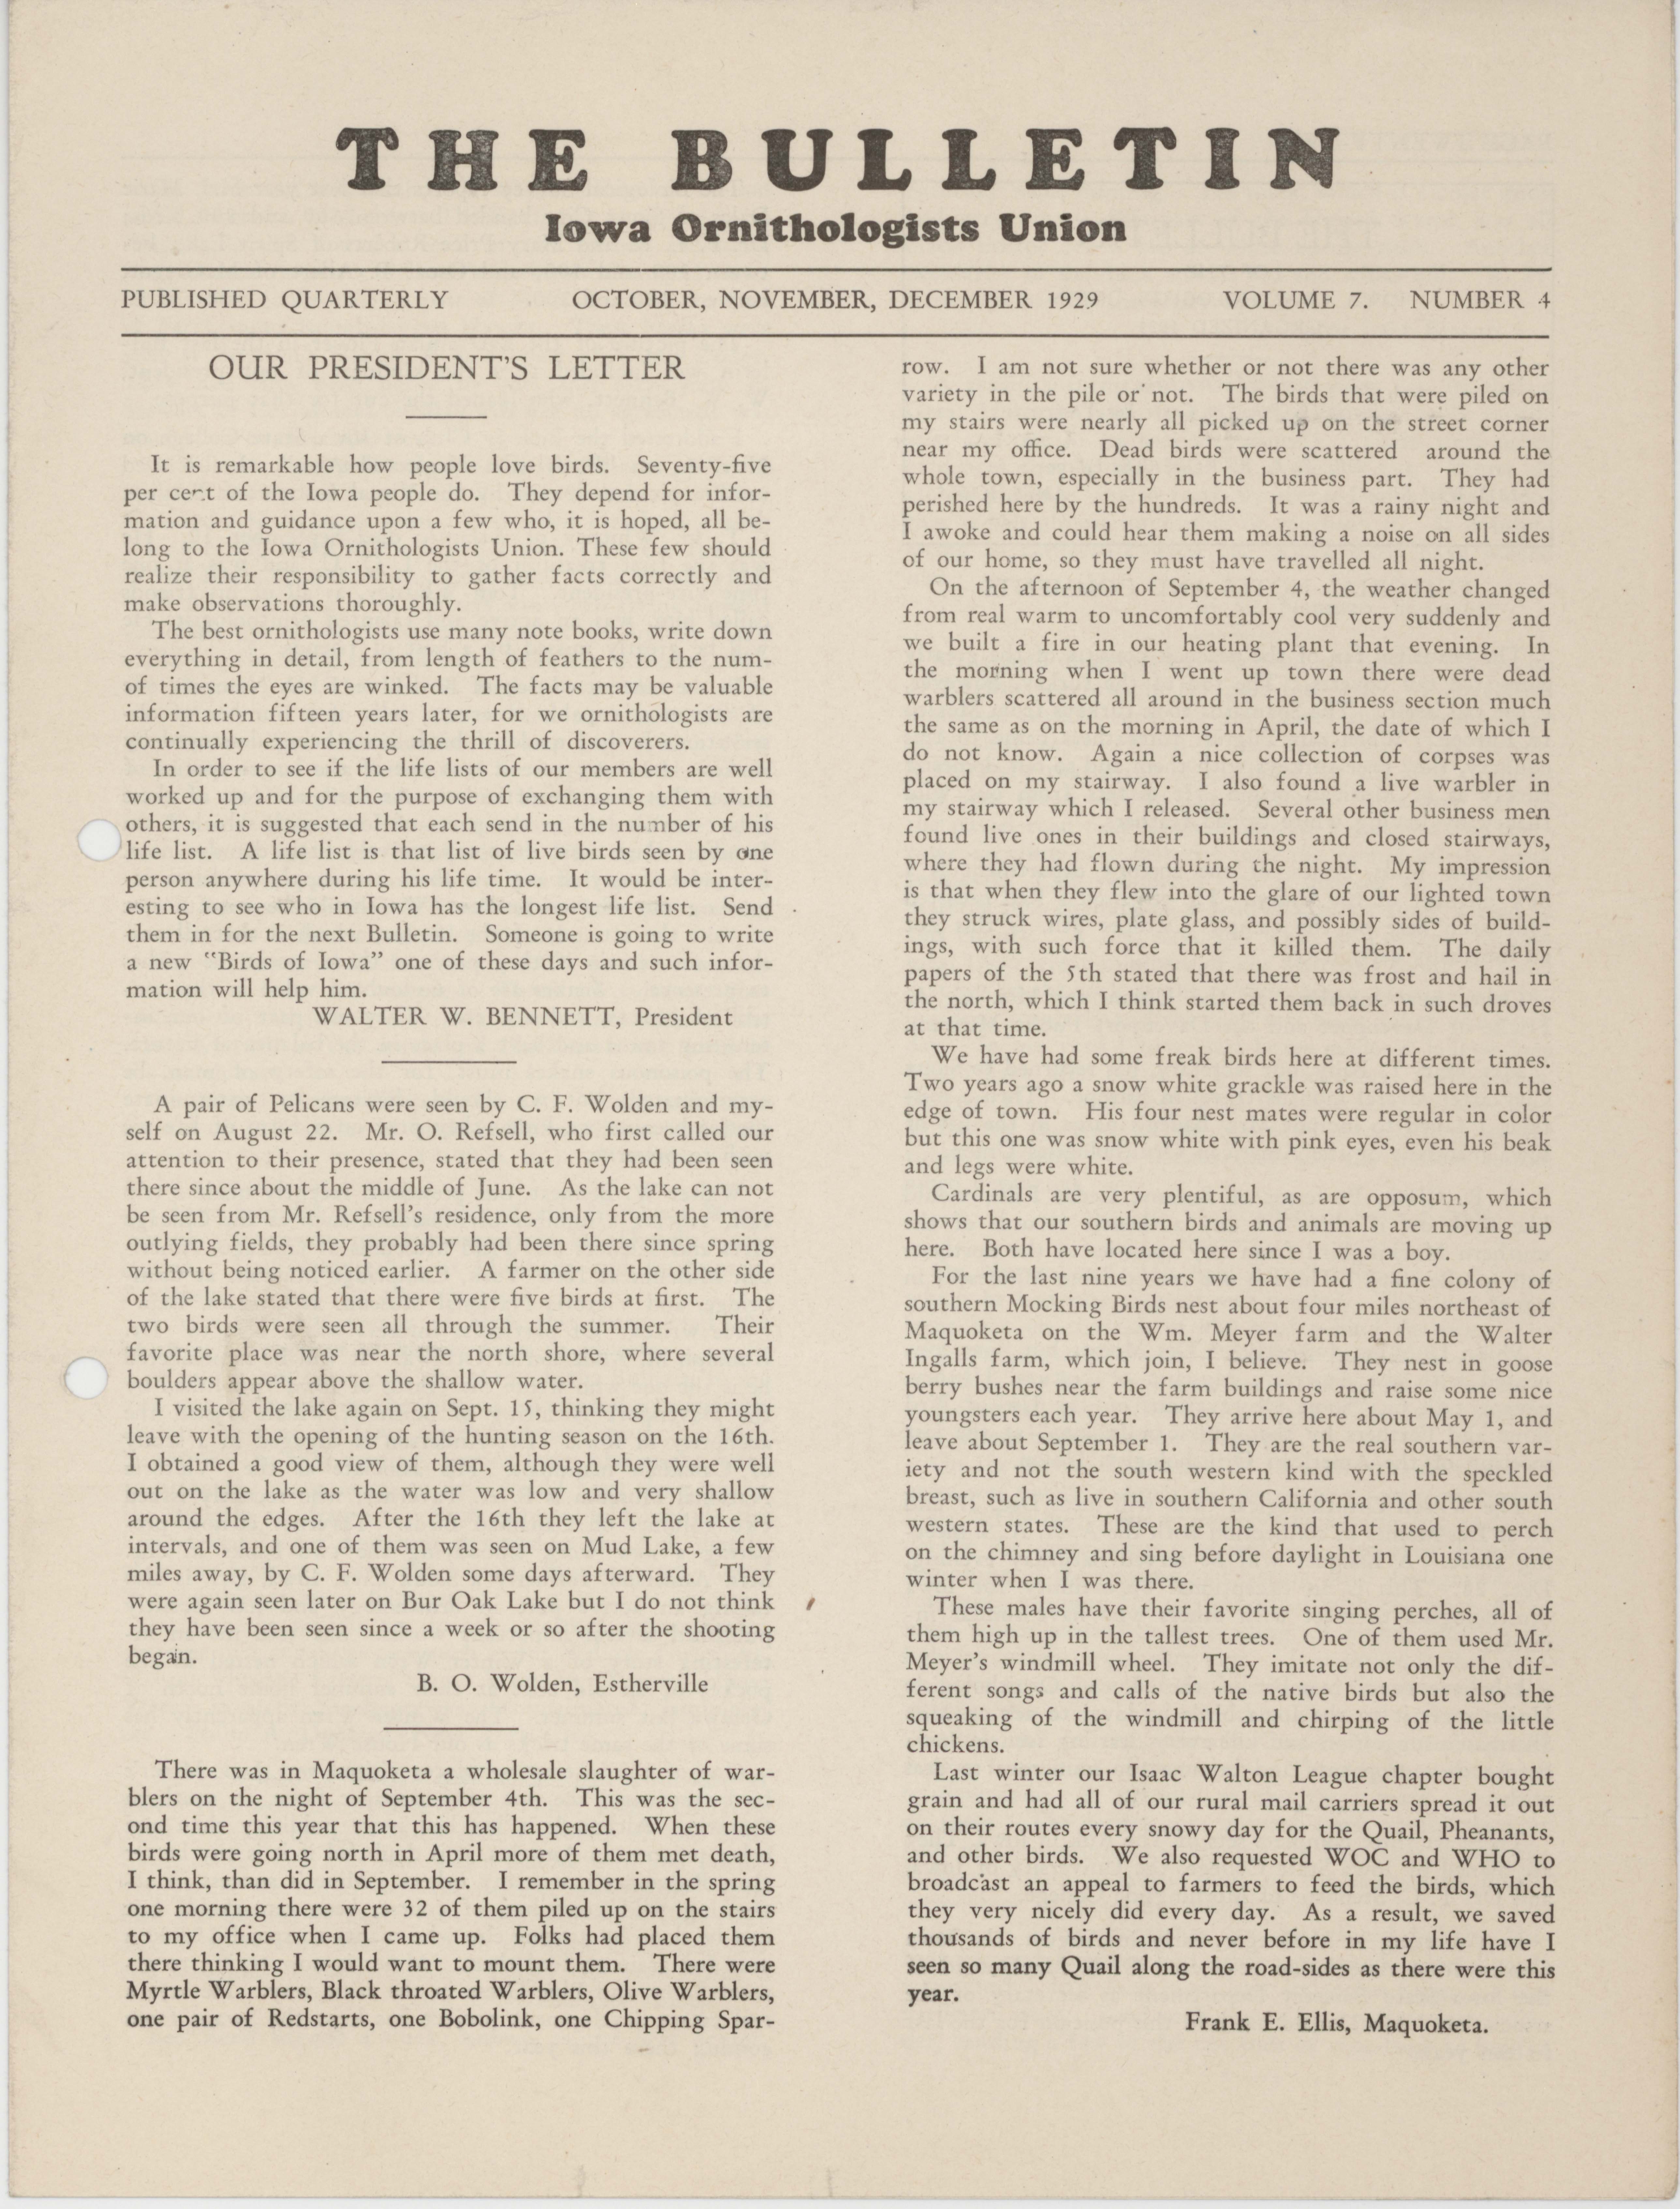 Bulletin (Iowa Ornithologists Union), Volume 7, Number 4, October/December 1929